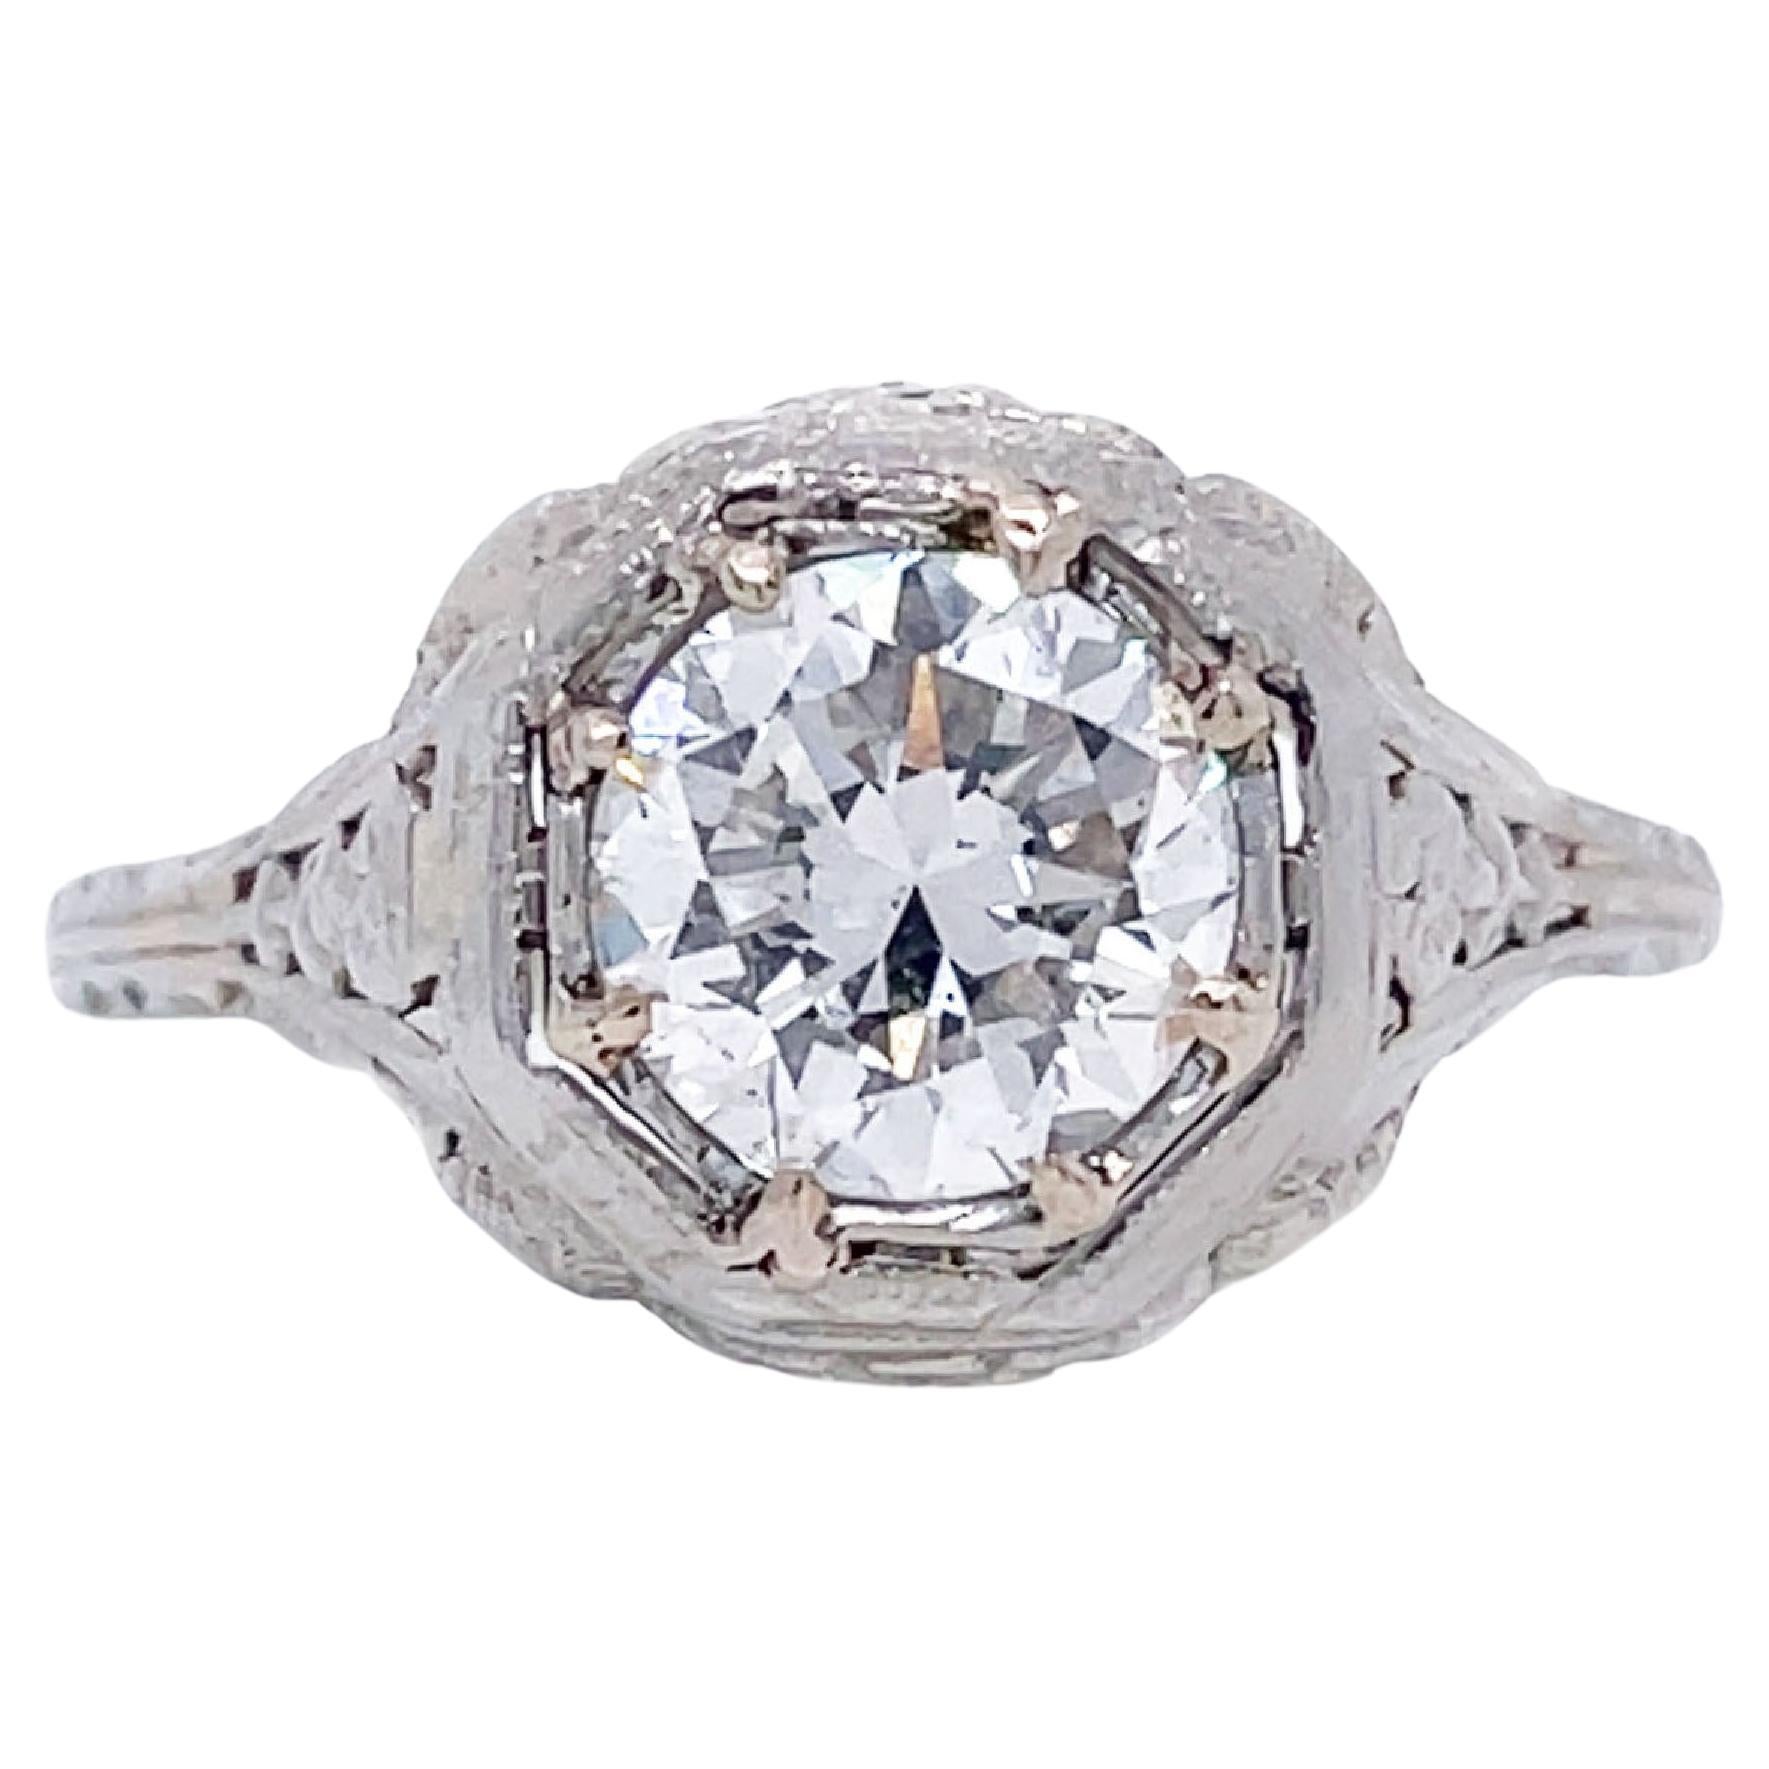 1920s 18K White Gold Filigree Diamond Love Bird Ring with GIA Report